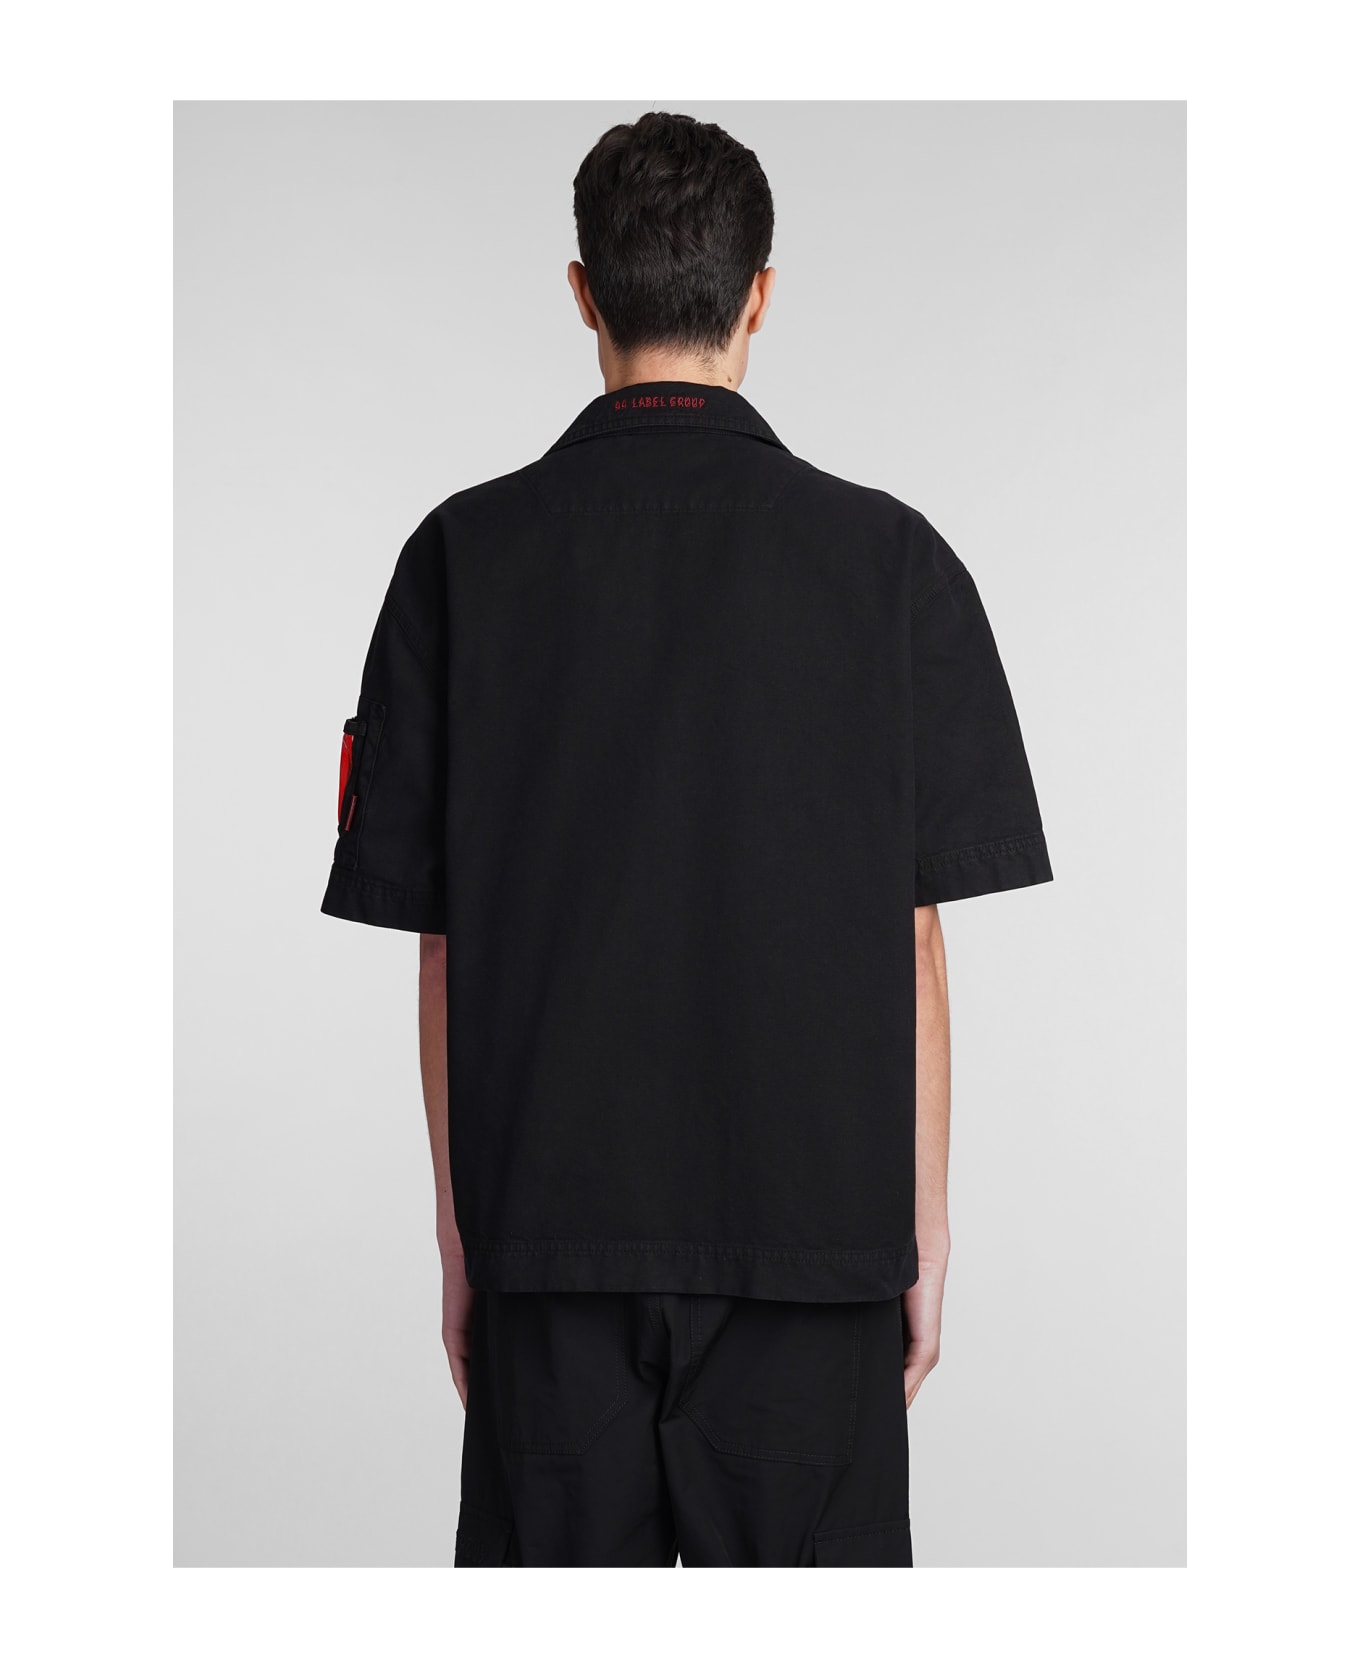 44 Label Group Shirt In Black Cotton - black シャツ